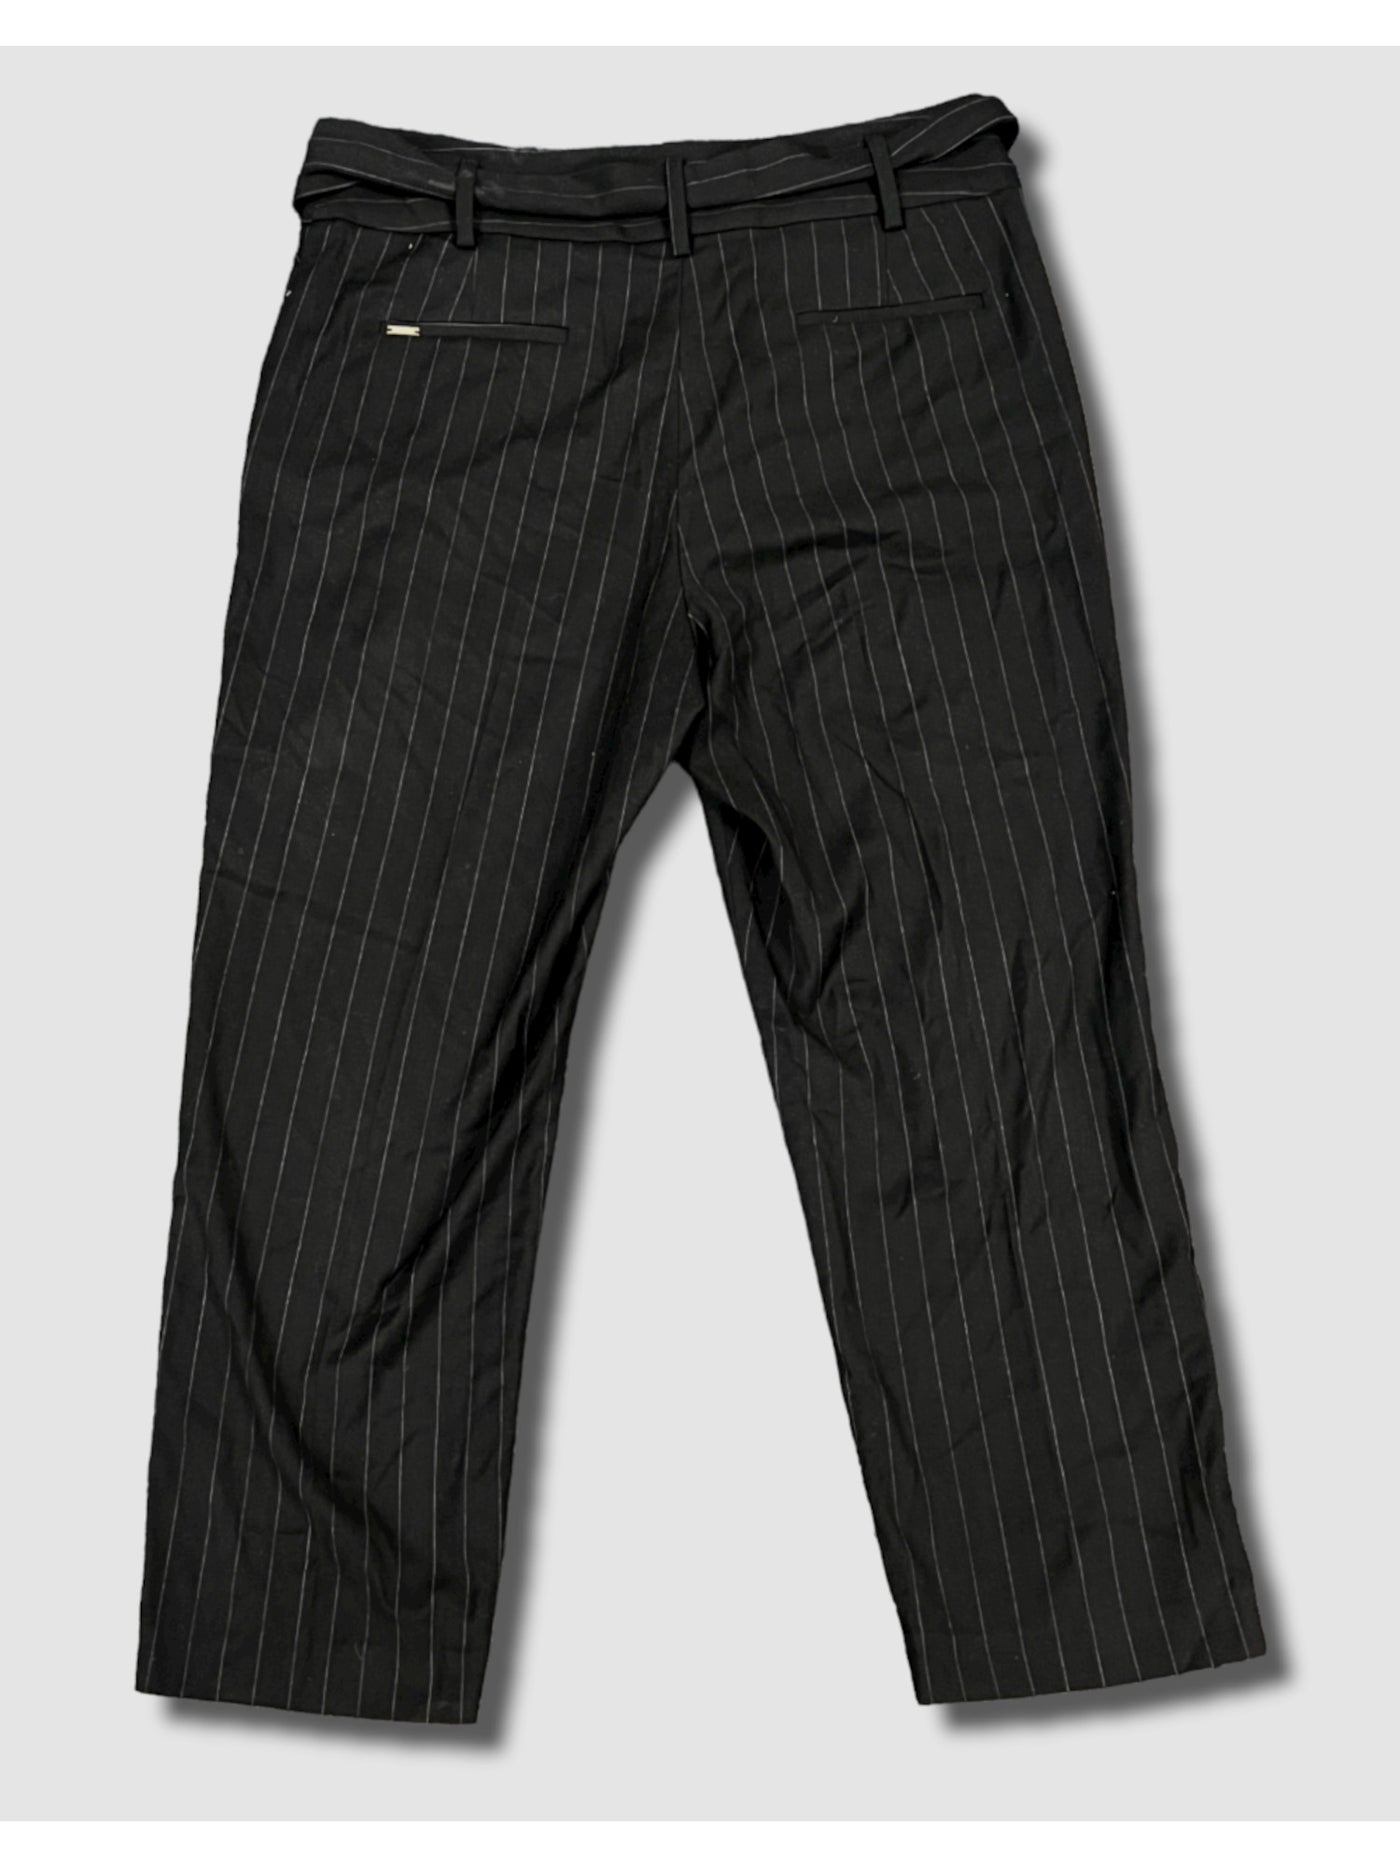 DKNY Womens Black Zippered Pocketed Tie Belt Pinstripe Wear To Work High Waist Pants 4